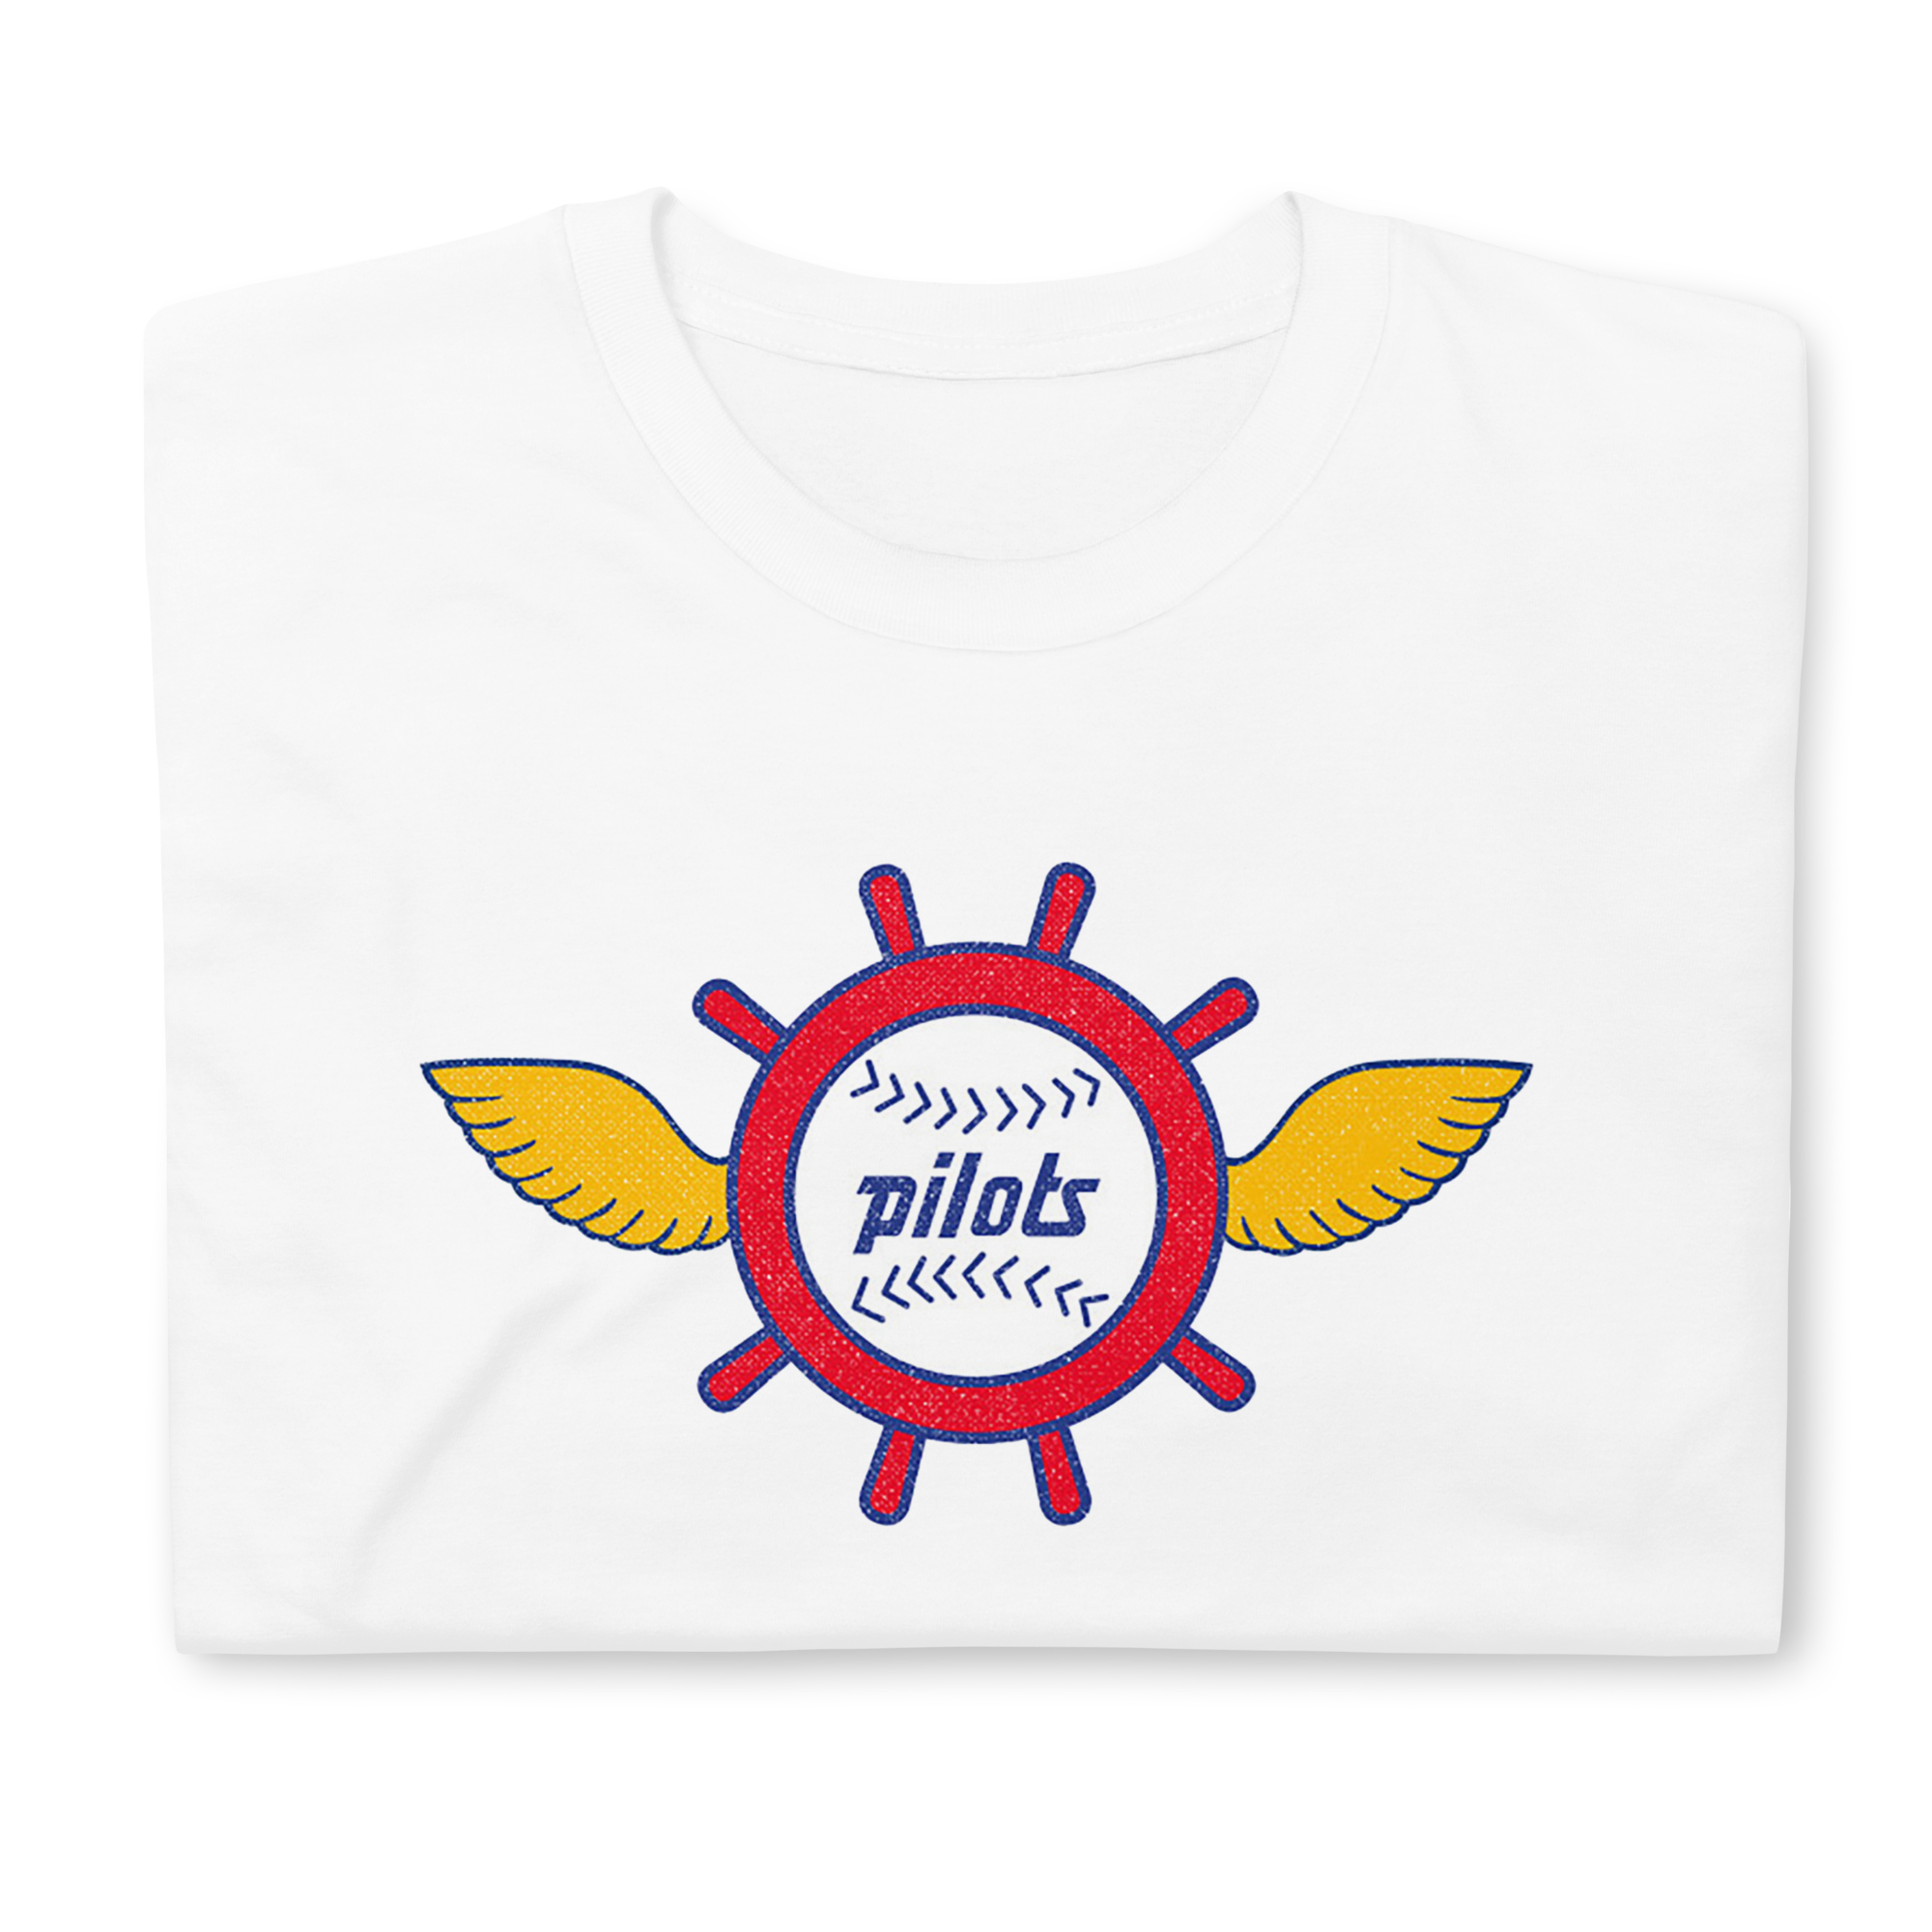 seattle pilots shirt